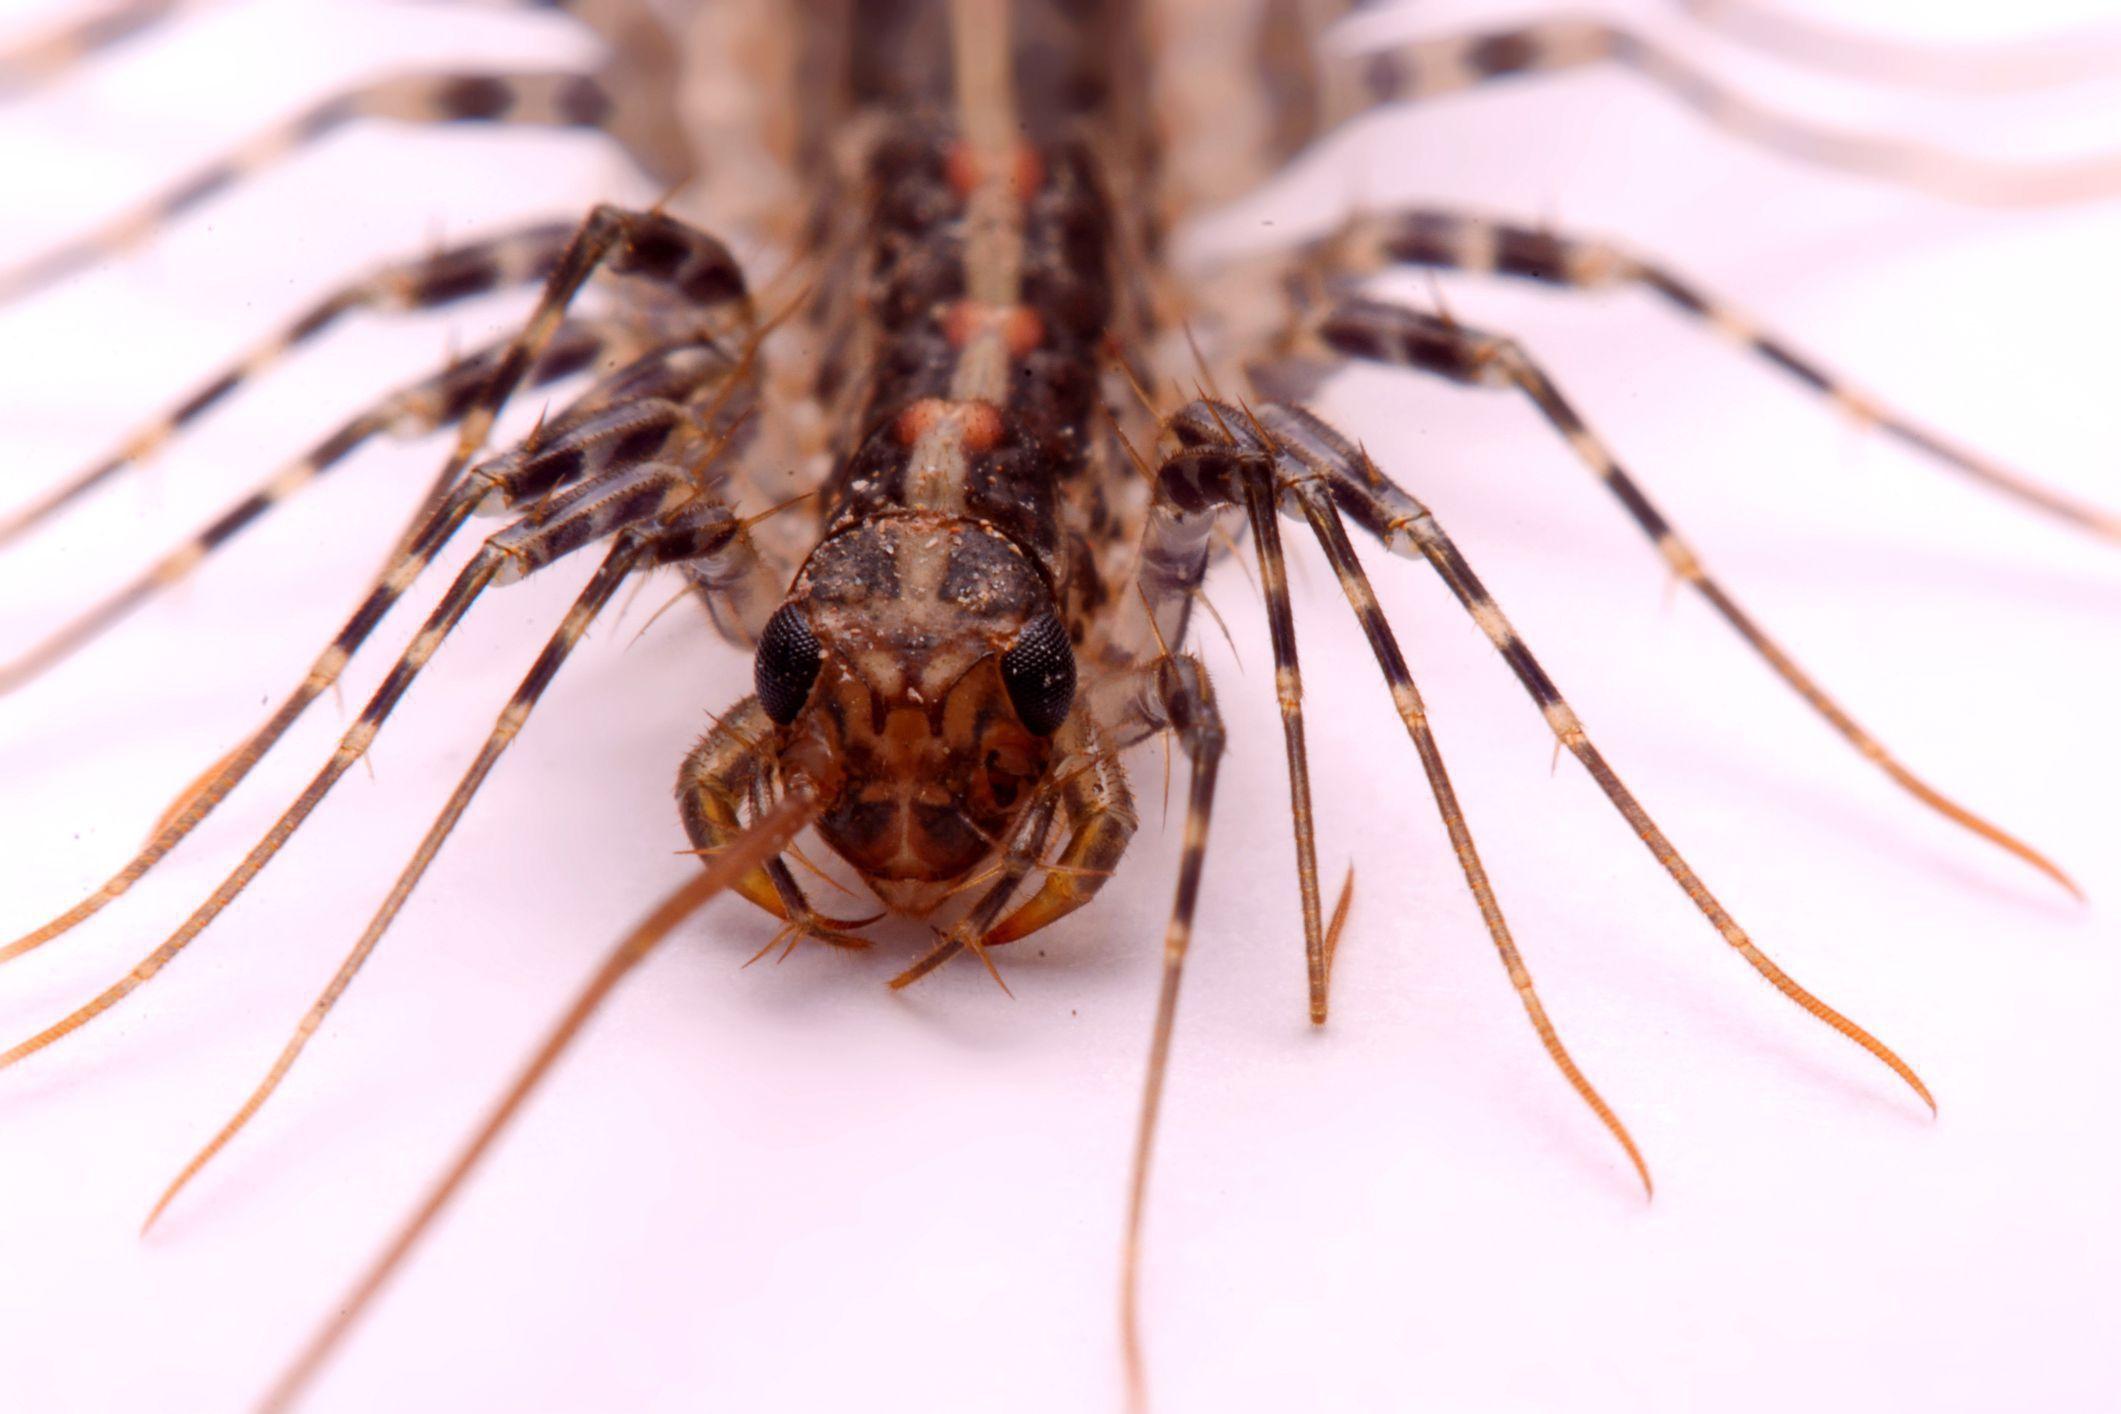 Centipede Free HD Wallpaper Image Background